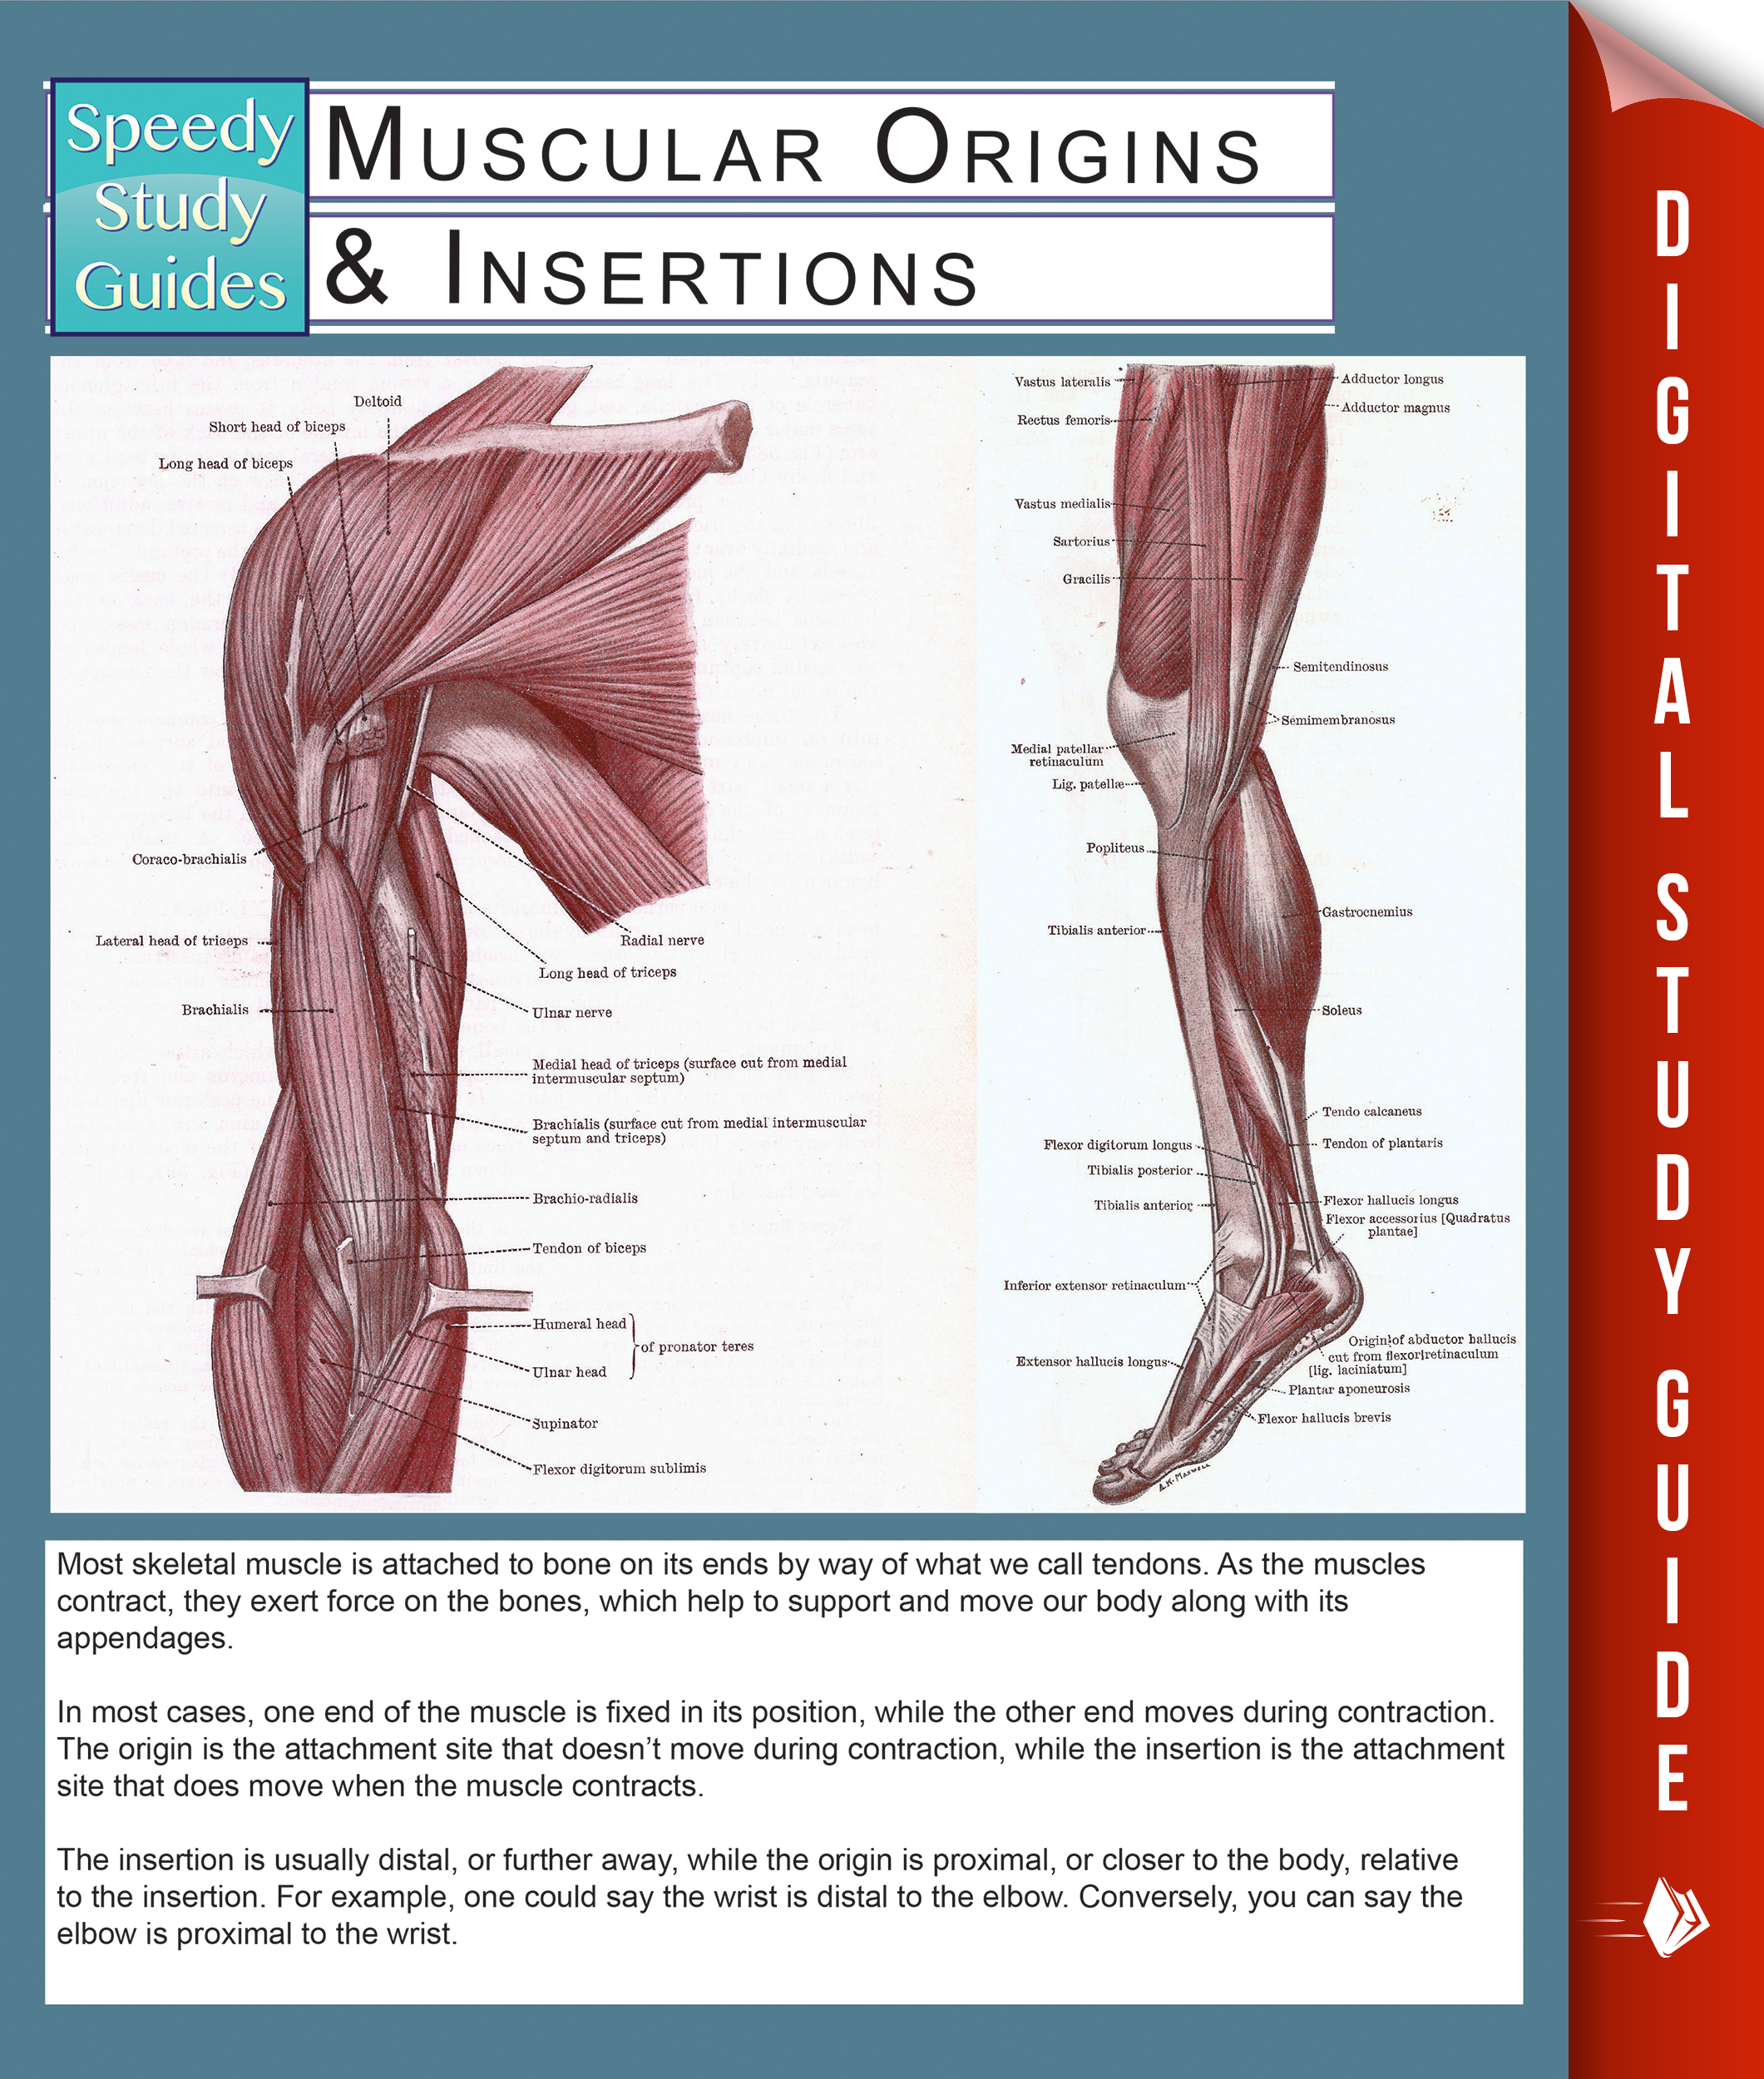 Muscular Origins & Insertions (Speedy Study Guides)